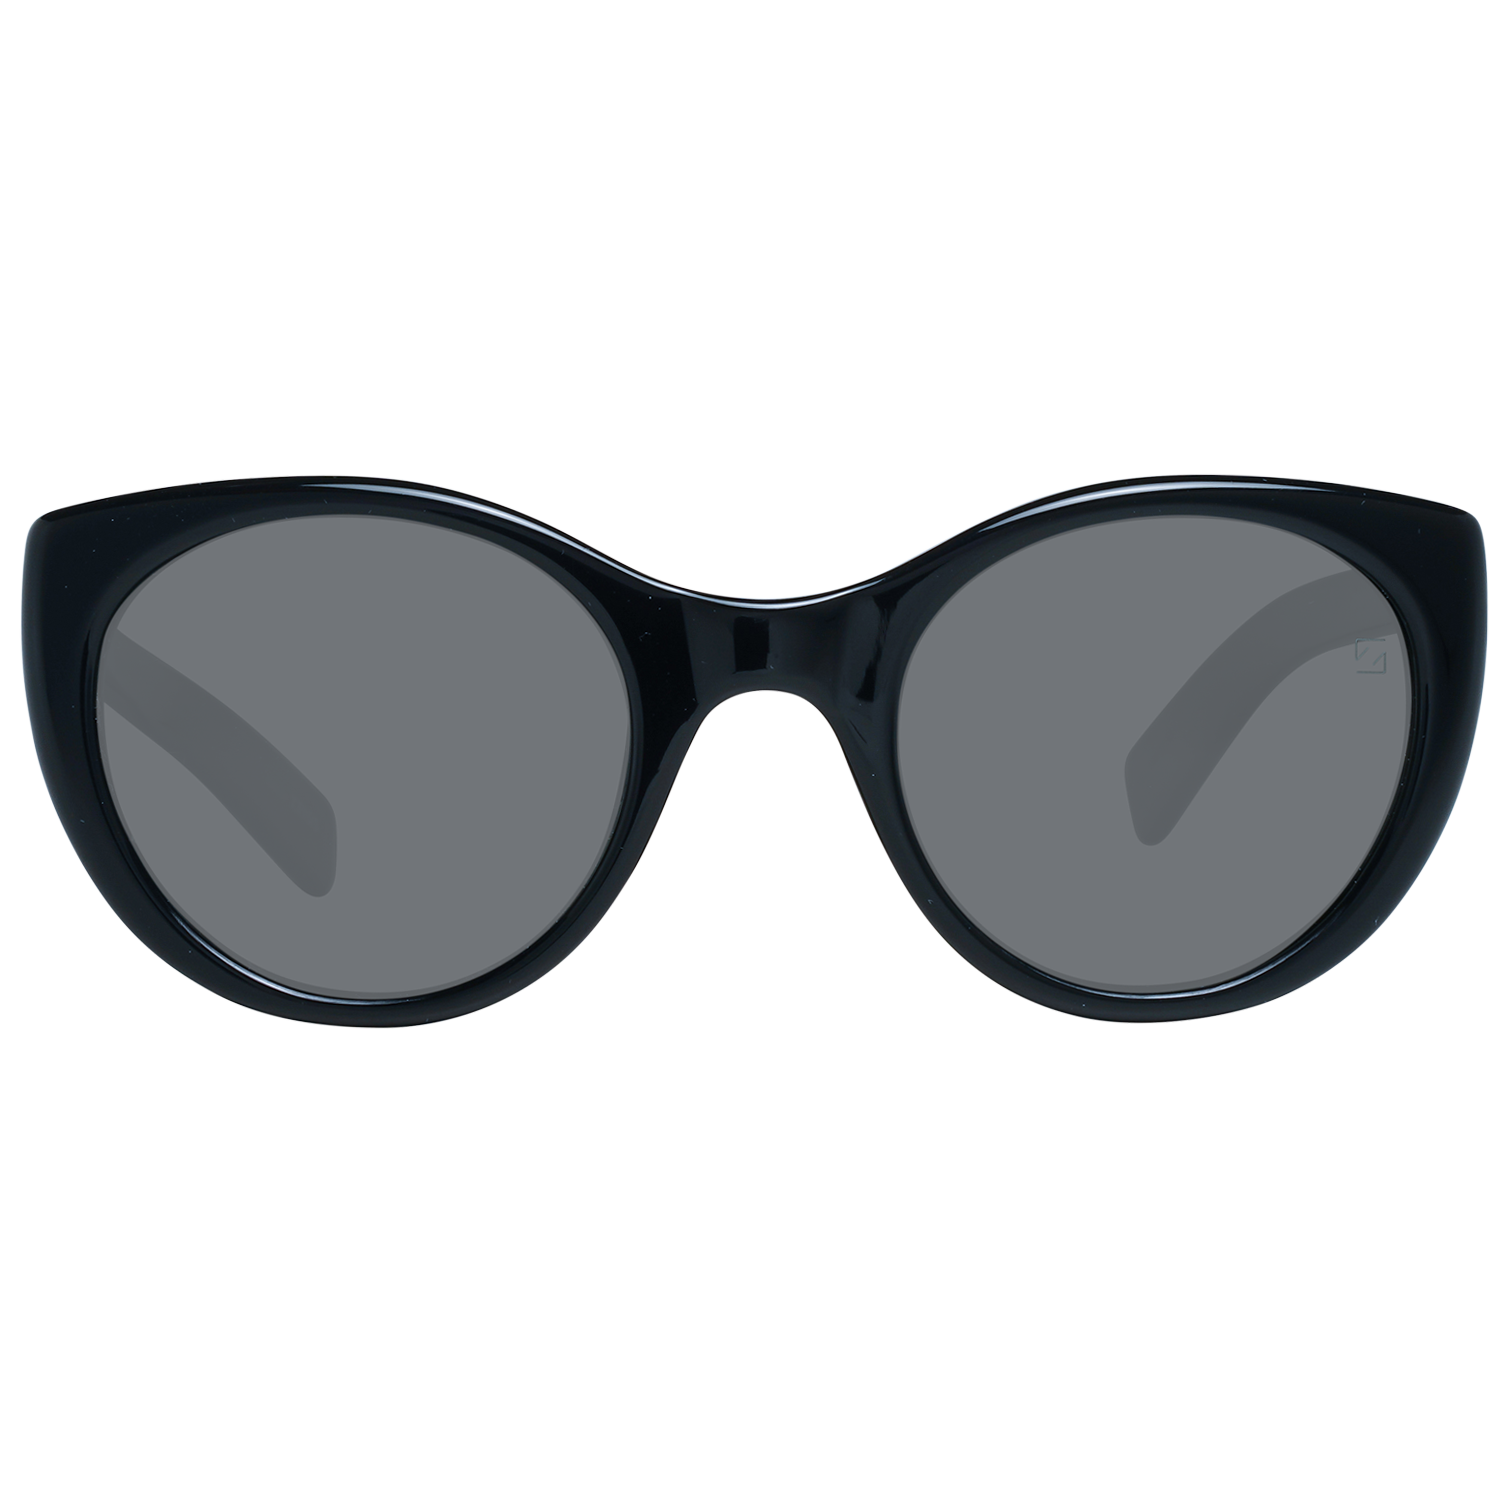 Zegna Couture Sunglasses Zegna Couture Sunglasses ZC0009 50 01A Eyeglasses Eyewear UK USA Australia 